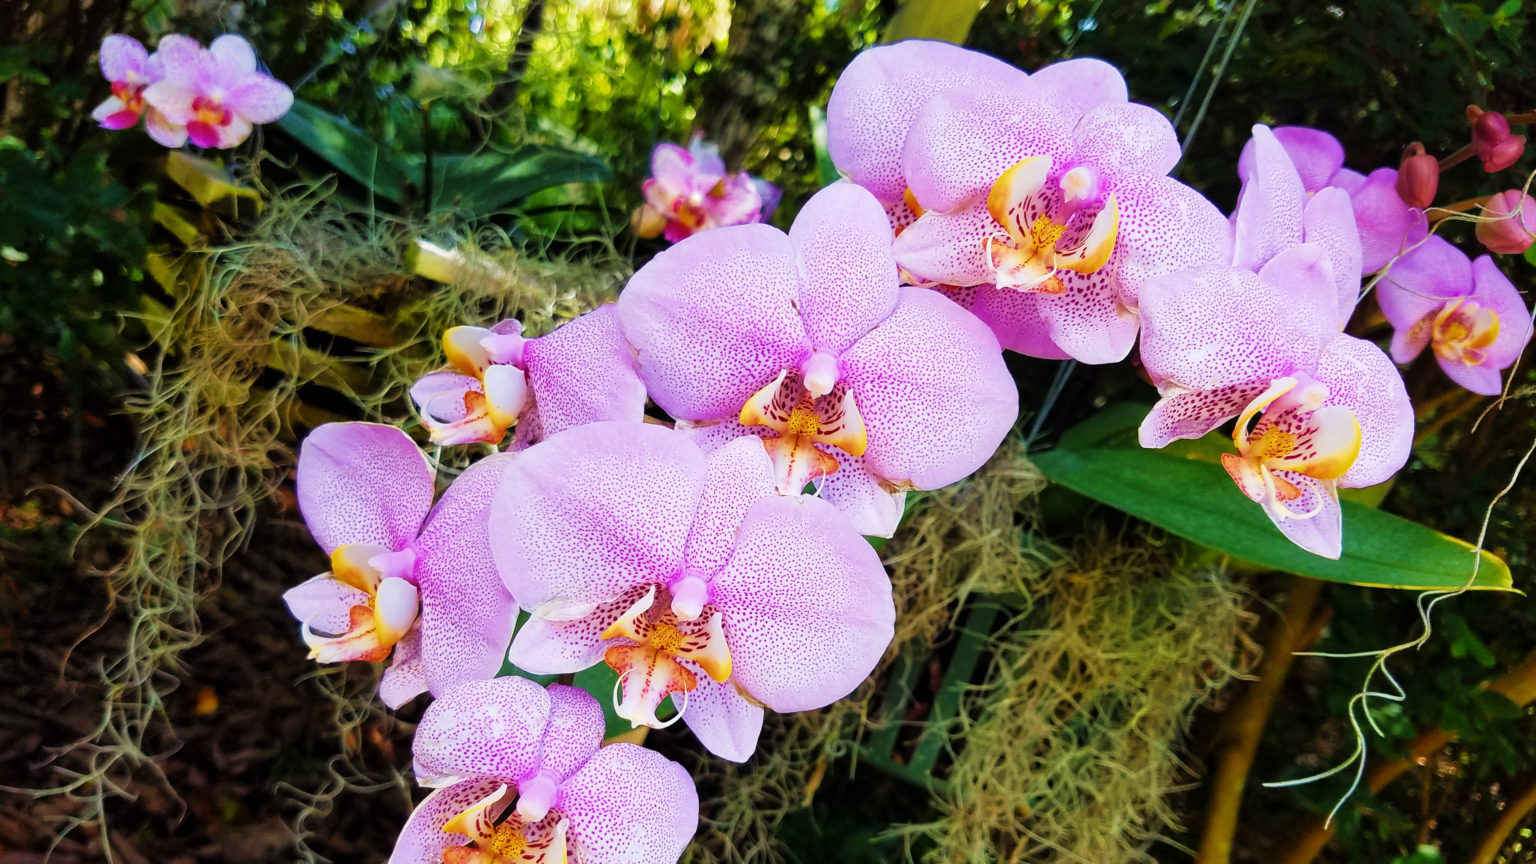 Phalaenopsis or Moth orchid. Photo by Alex Serna.